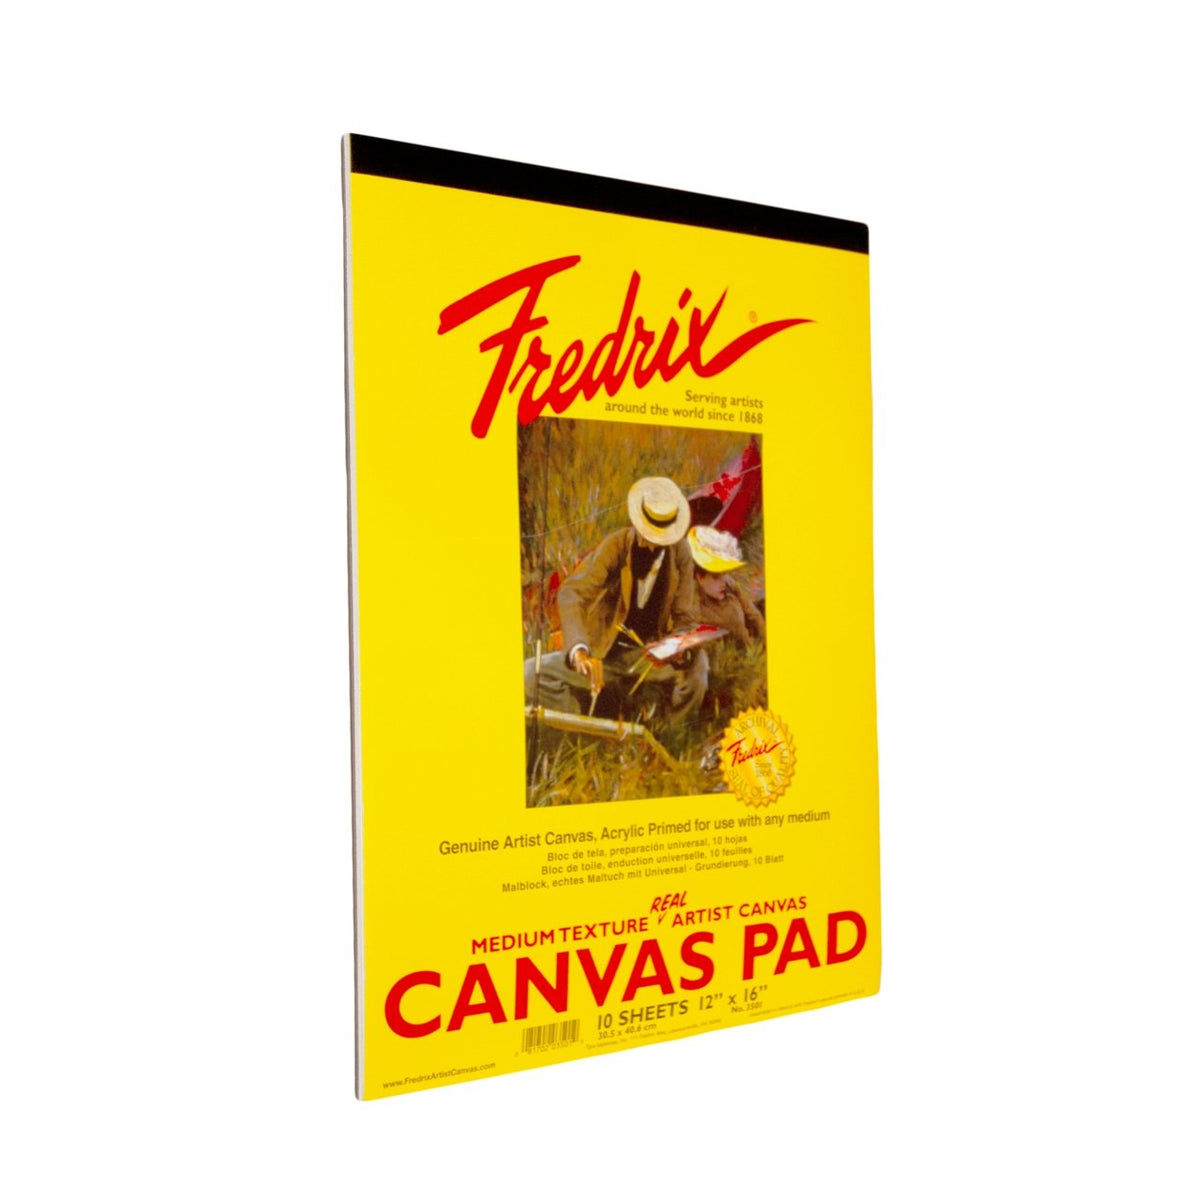 Fredrix Canvas Pad - Size: 12 x 16